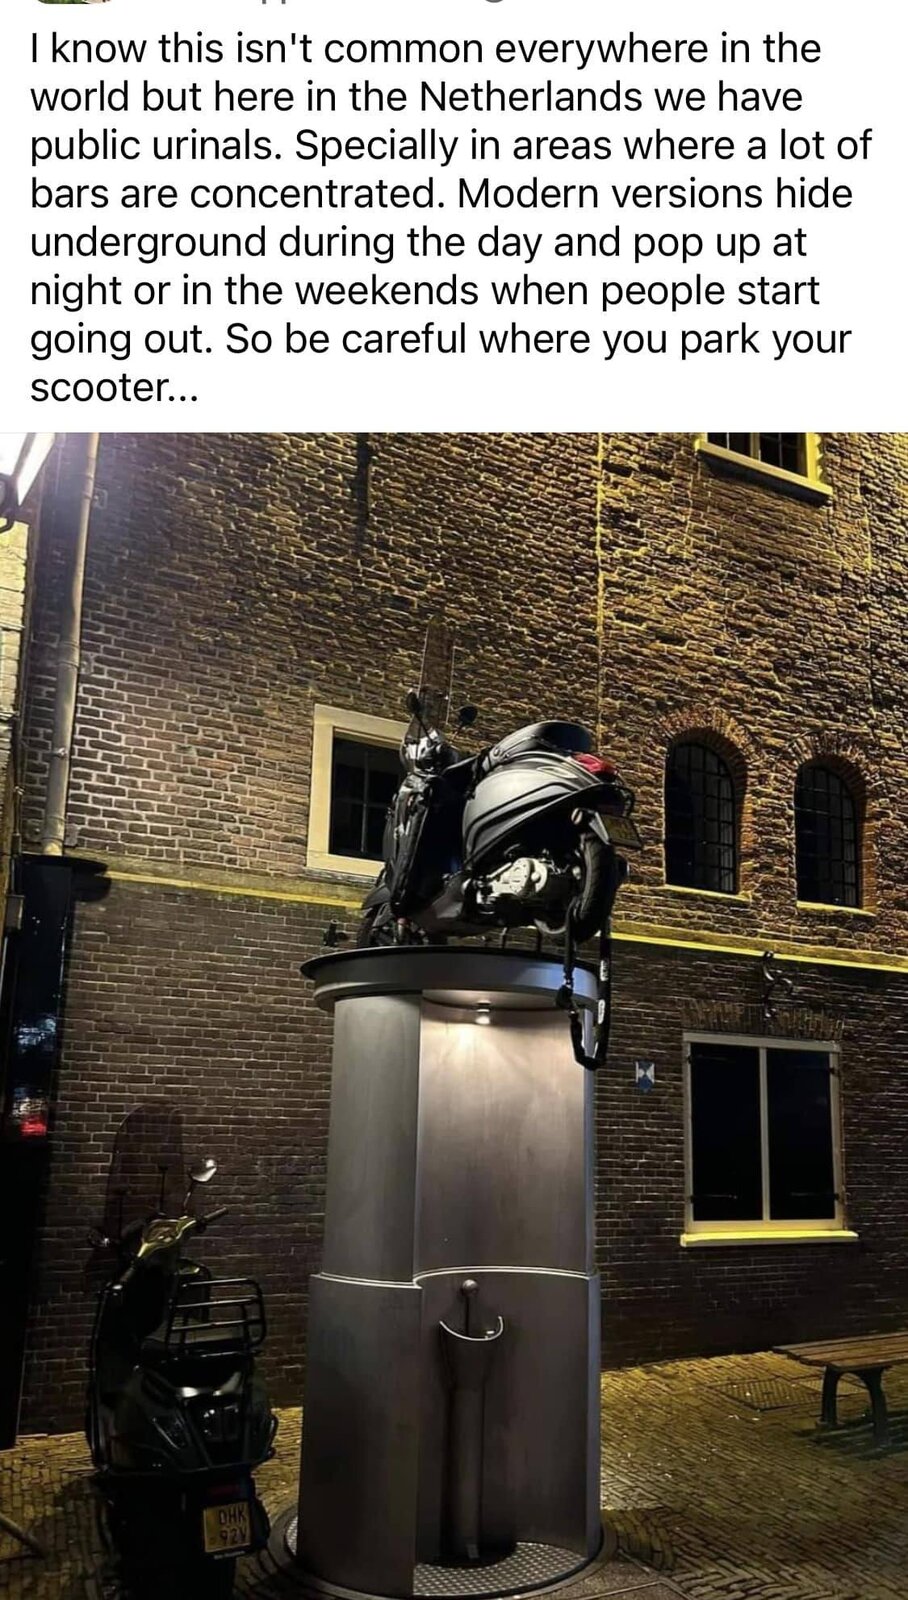 dutch pissoire with scooter.jpg